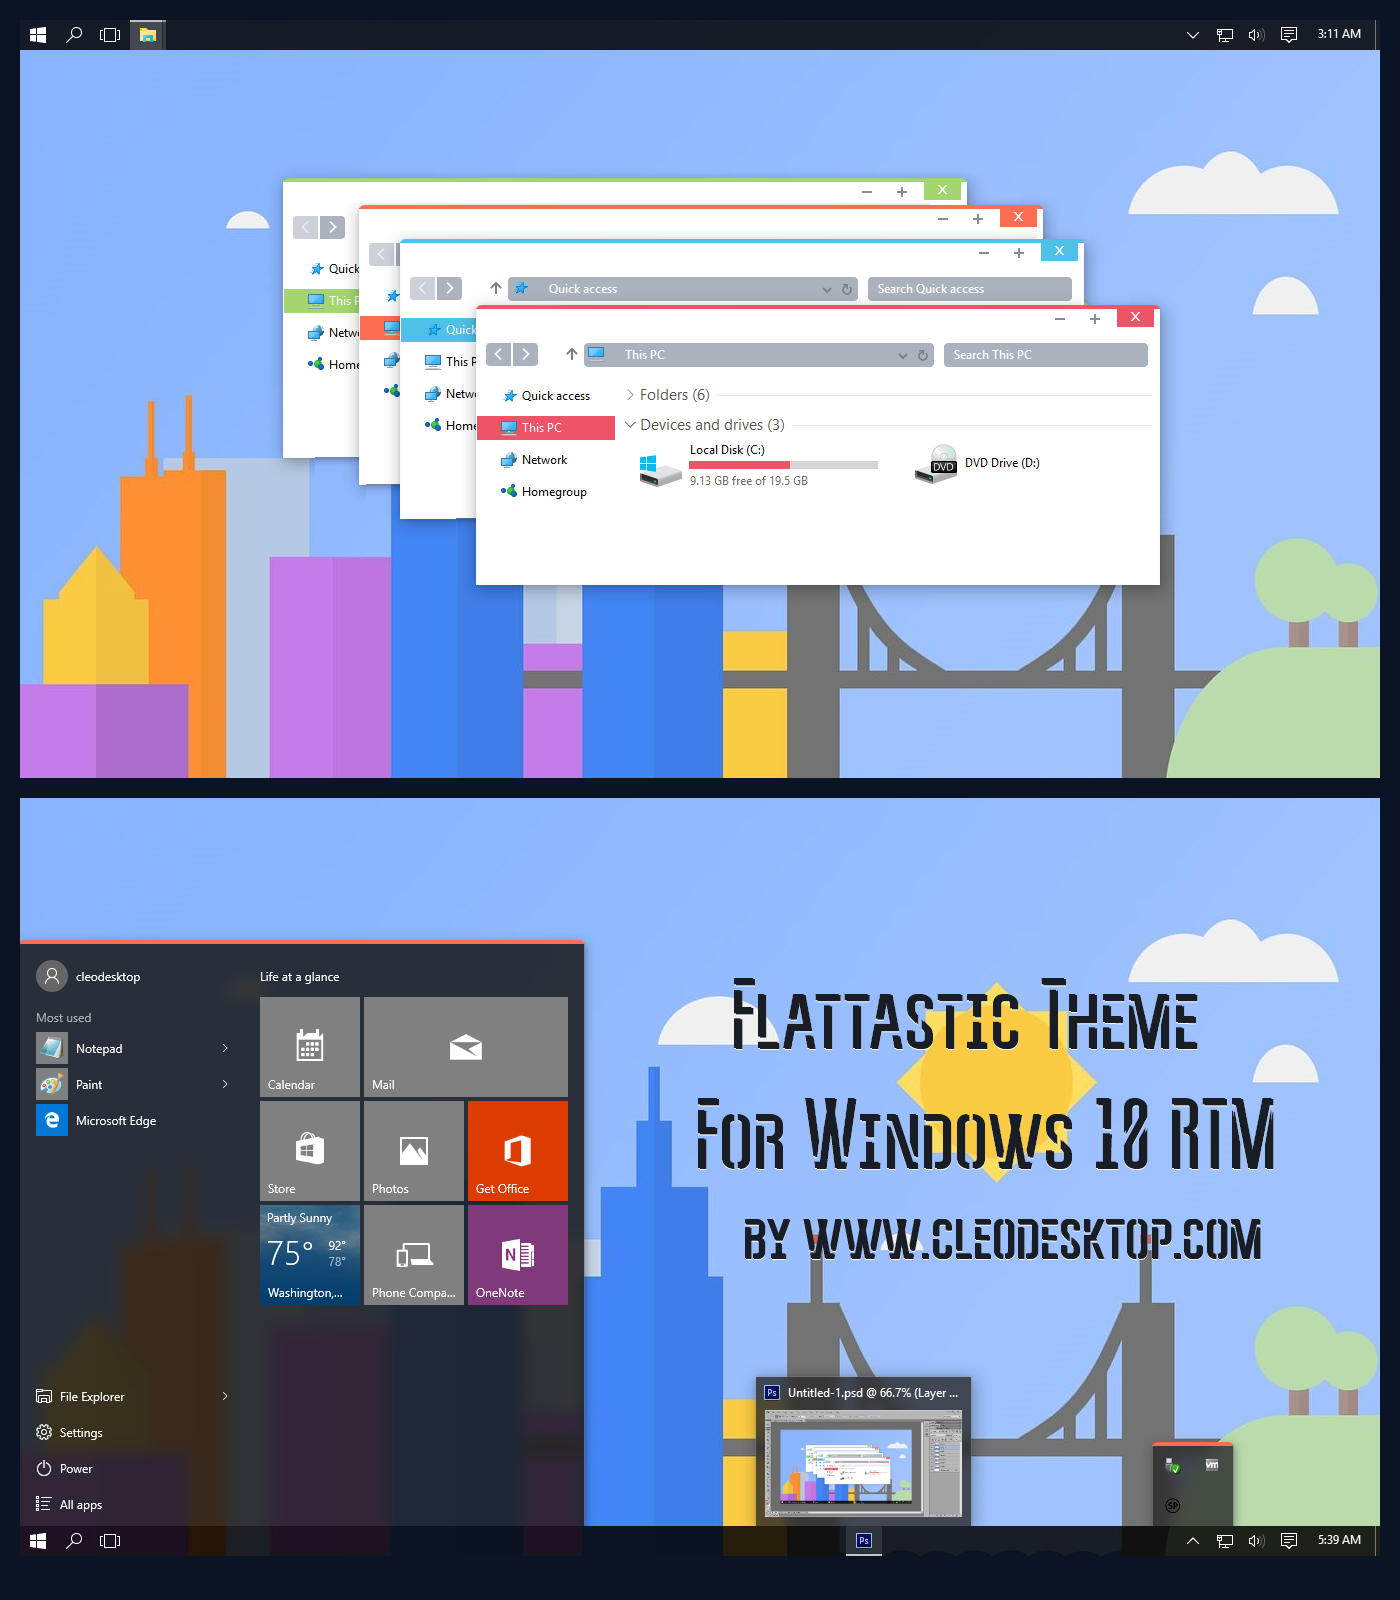 Flattastic Theme For Windows Rtm Cleodesktop